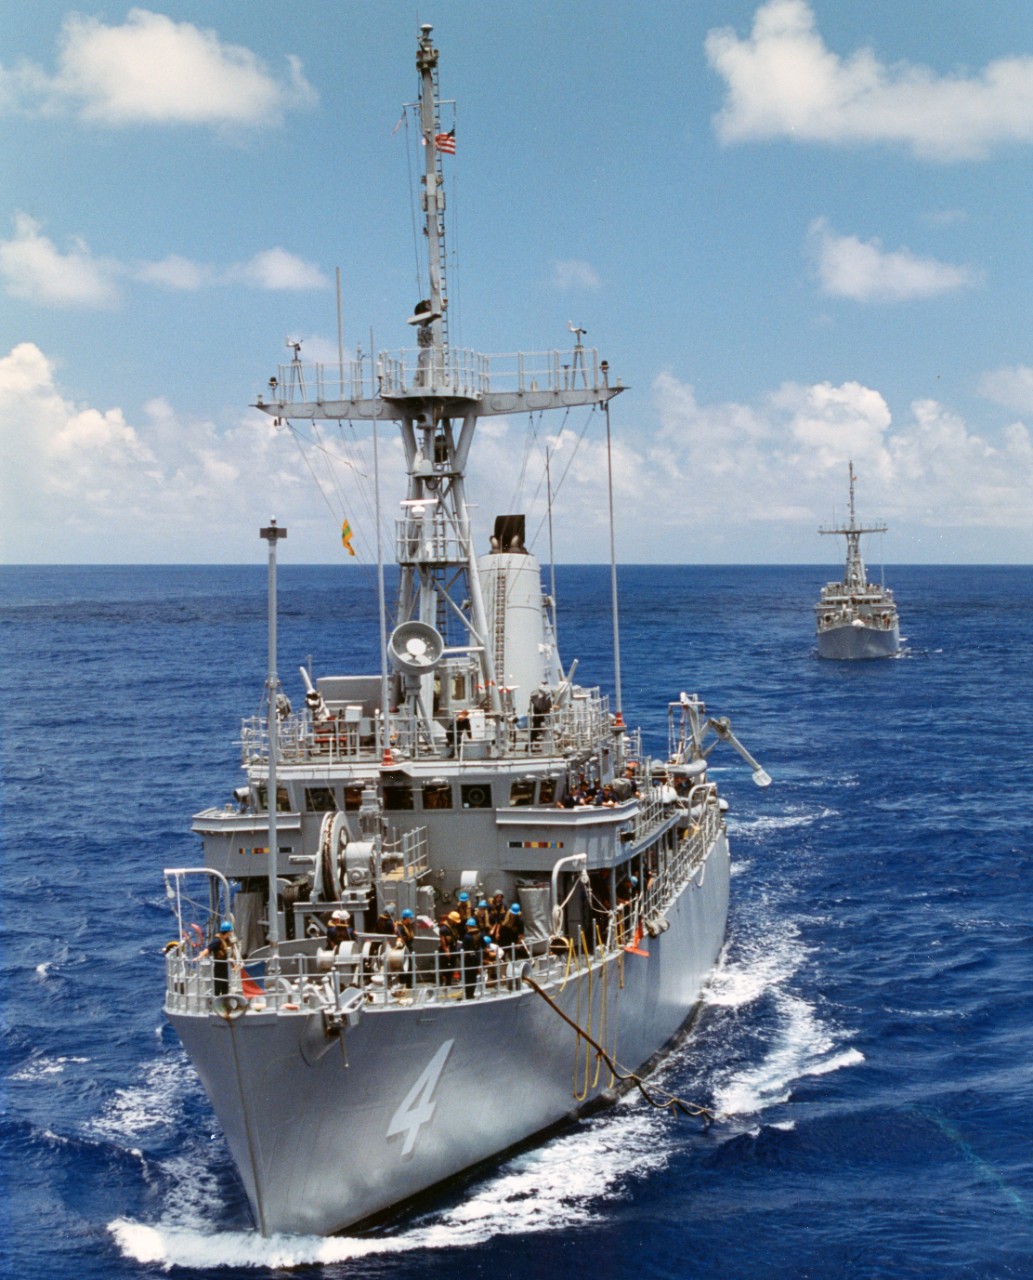 USS Champion (MCM-4)